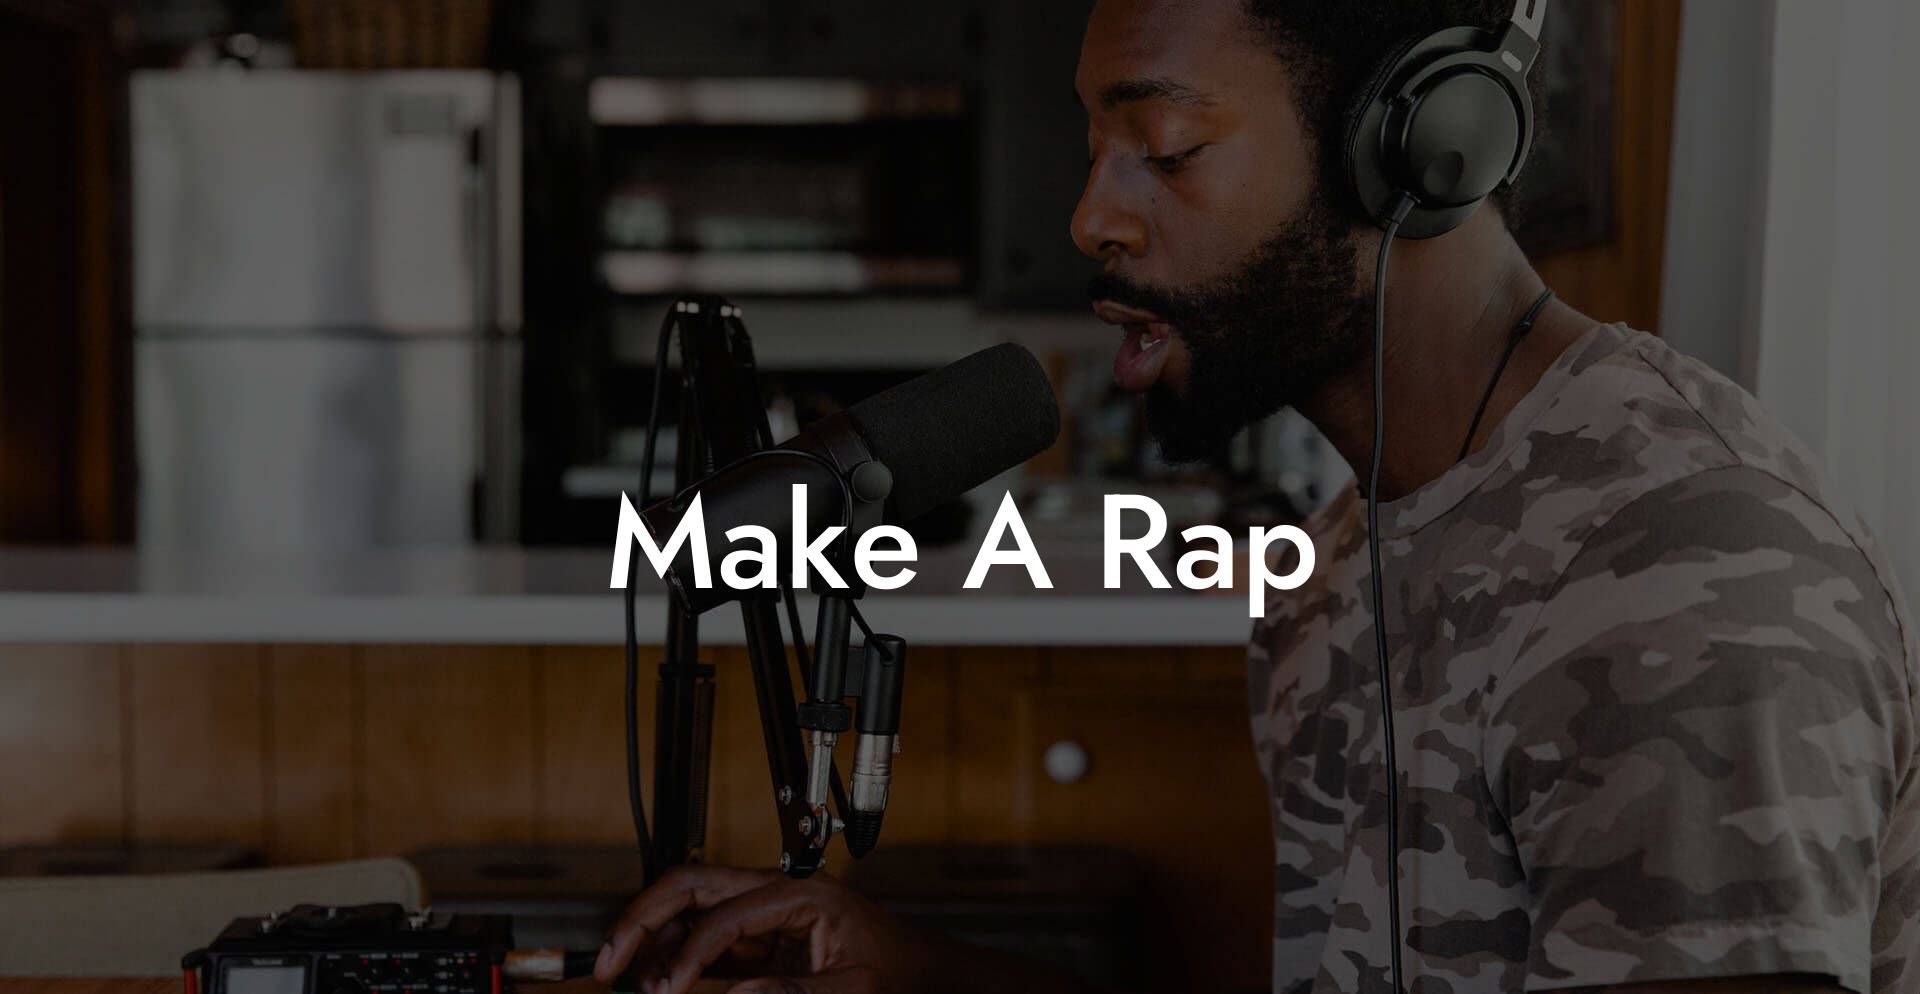 make a rap lyric assistant